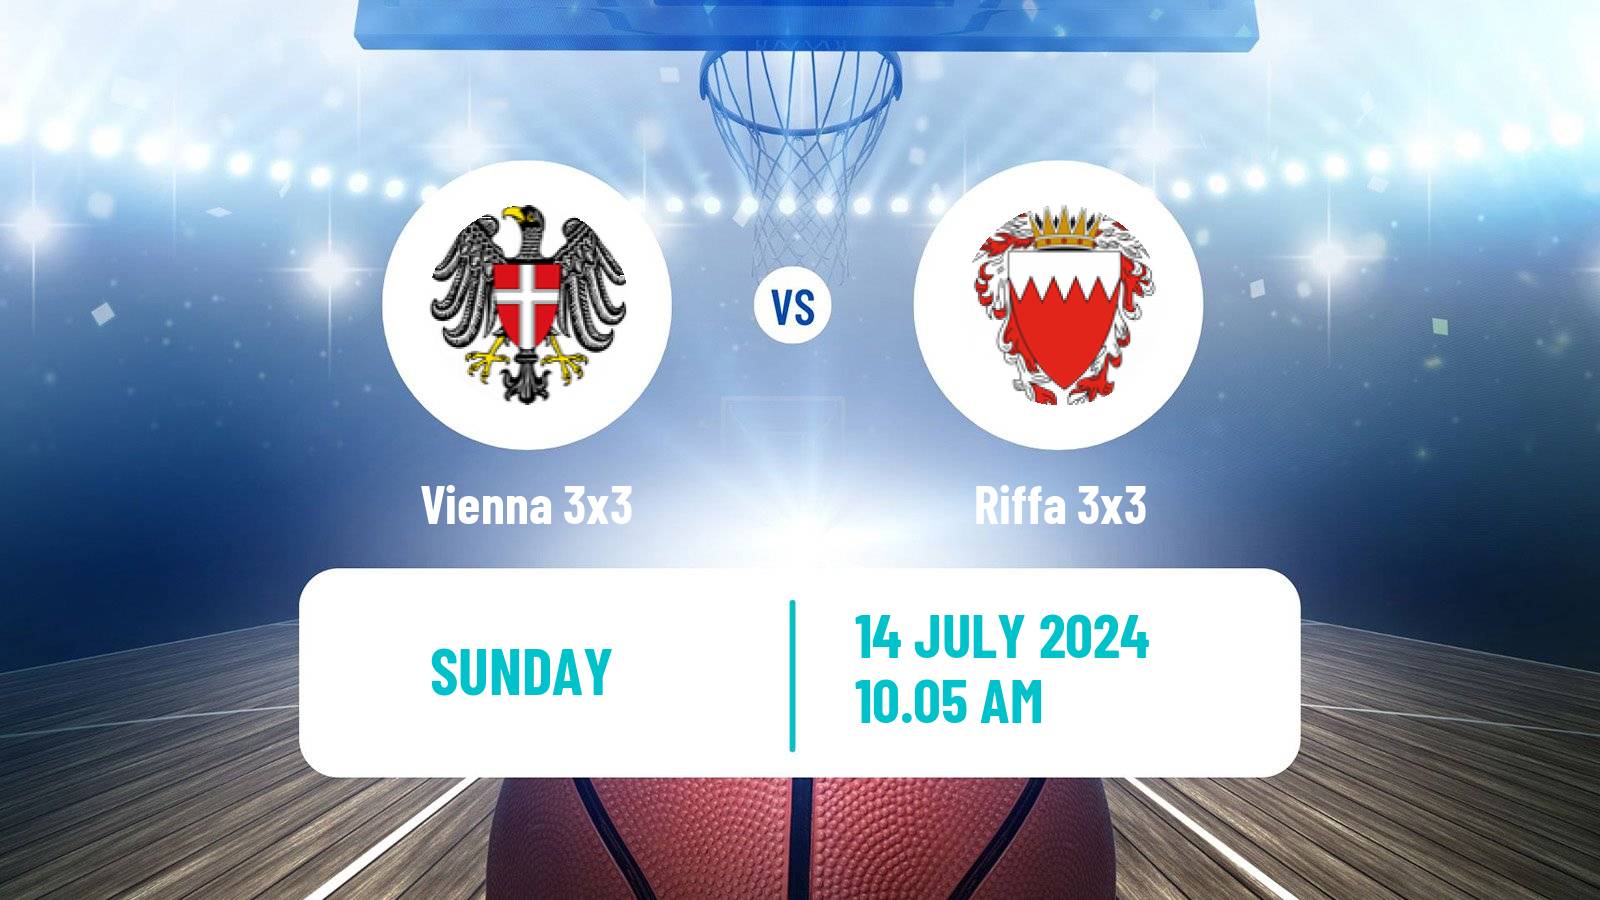 Basketball World Tour Almaty 3x3 Vienna 3x3 - Riffa 3x3